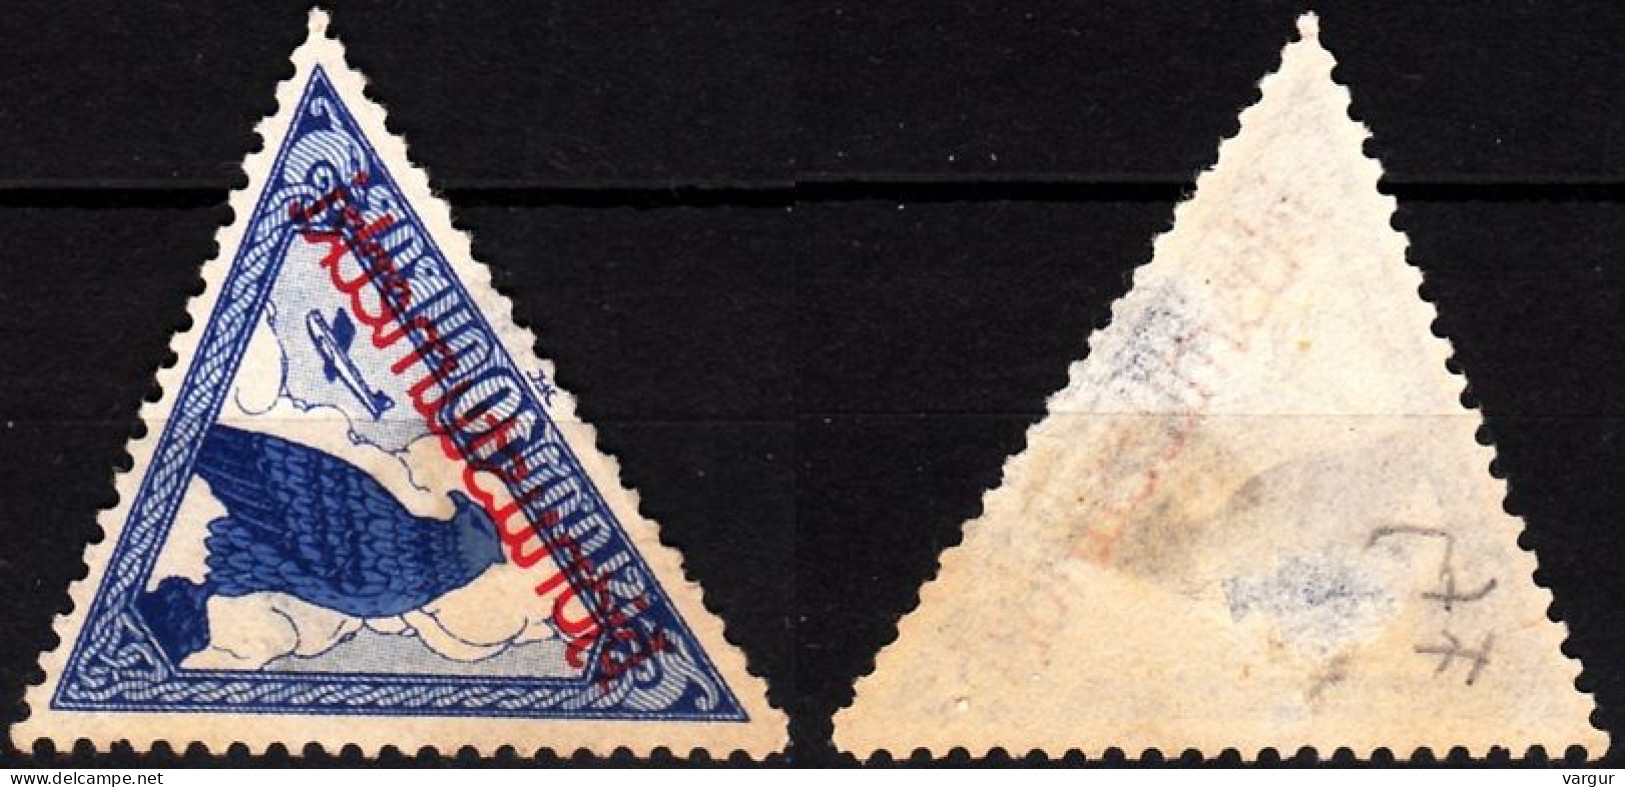 ICELAND / ISLAND Postage Due 1930 Airmail. Eagle, Mint No Gum Lot #2 - Dienstzegels